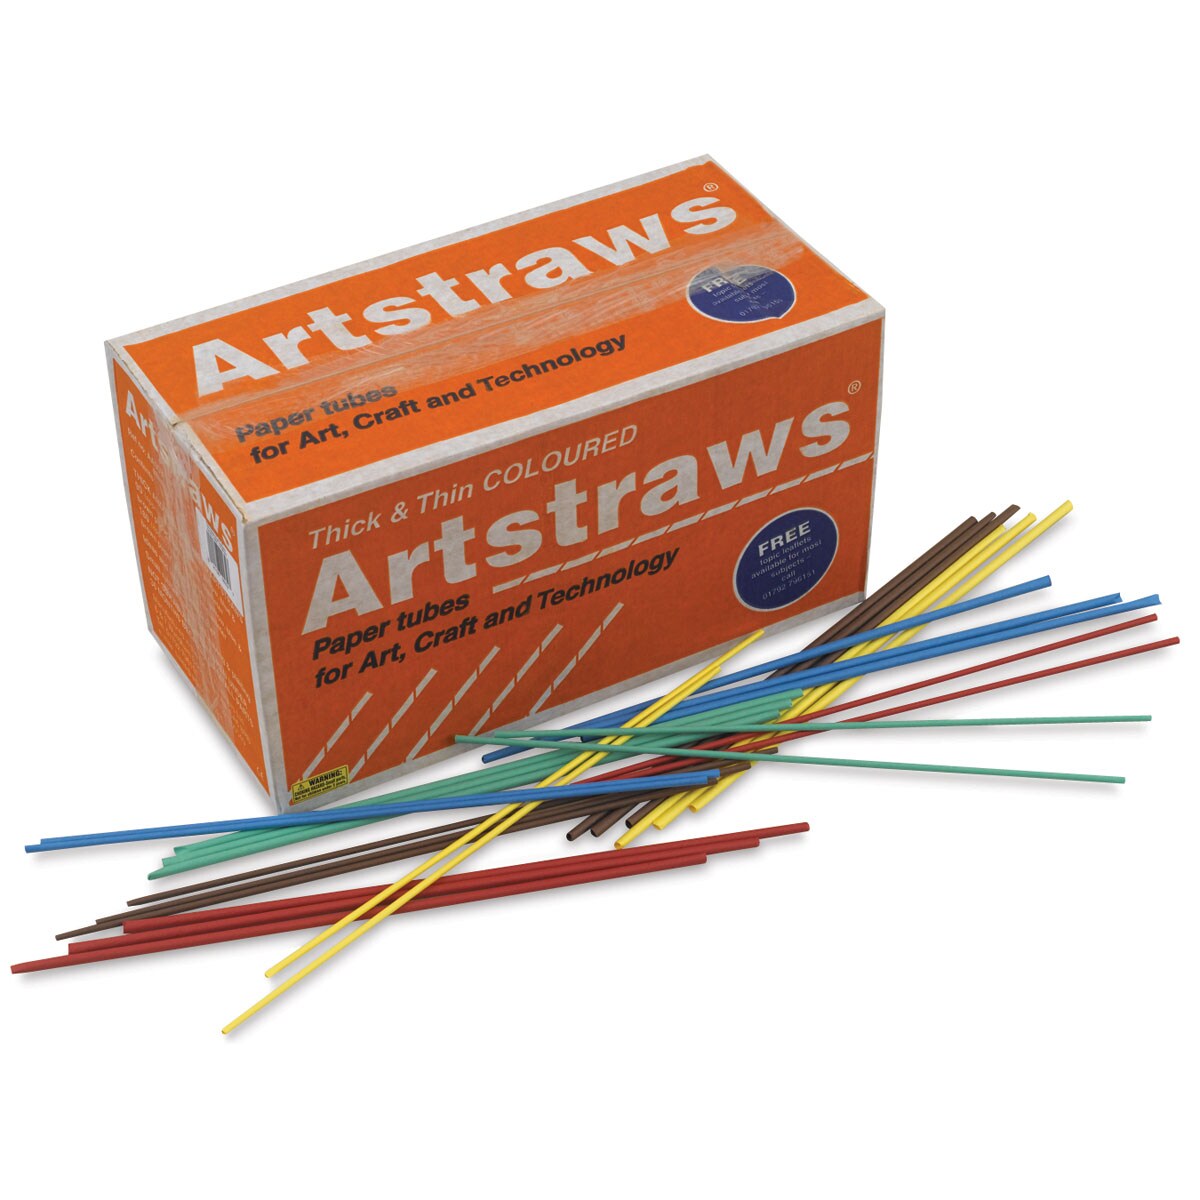 Artstraws Paper Tubes - Assorted Colors, Pkg of 1350